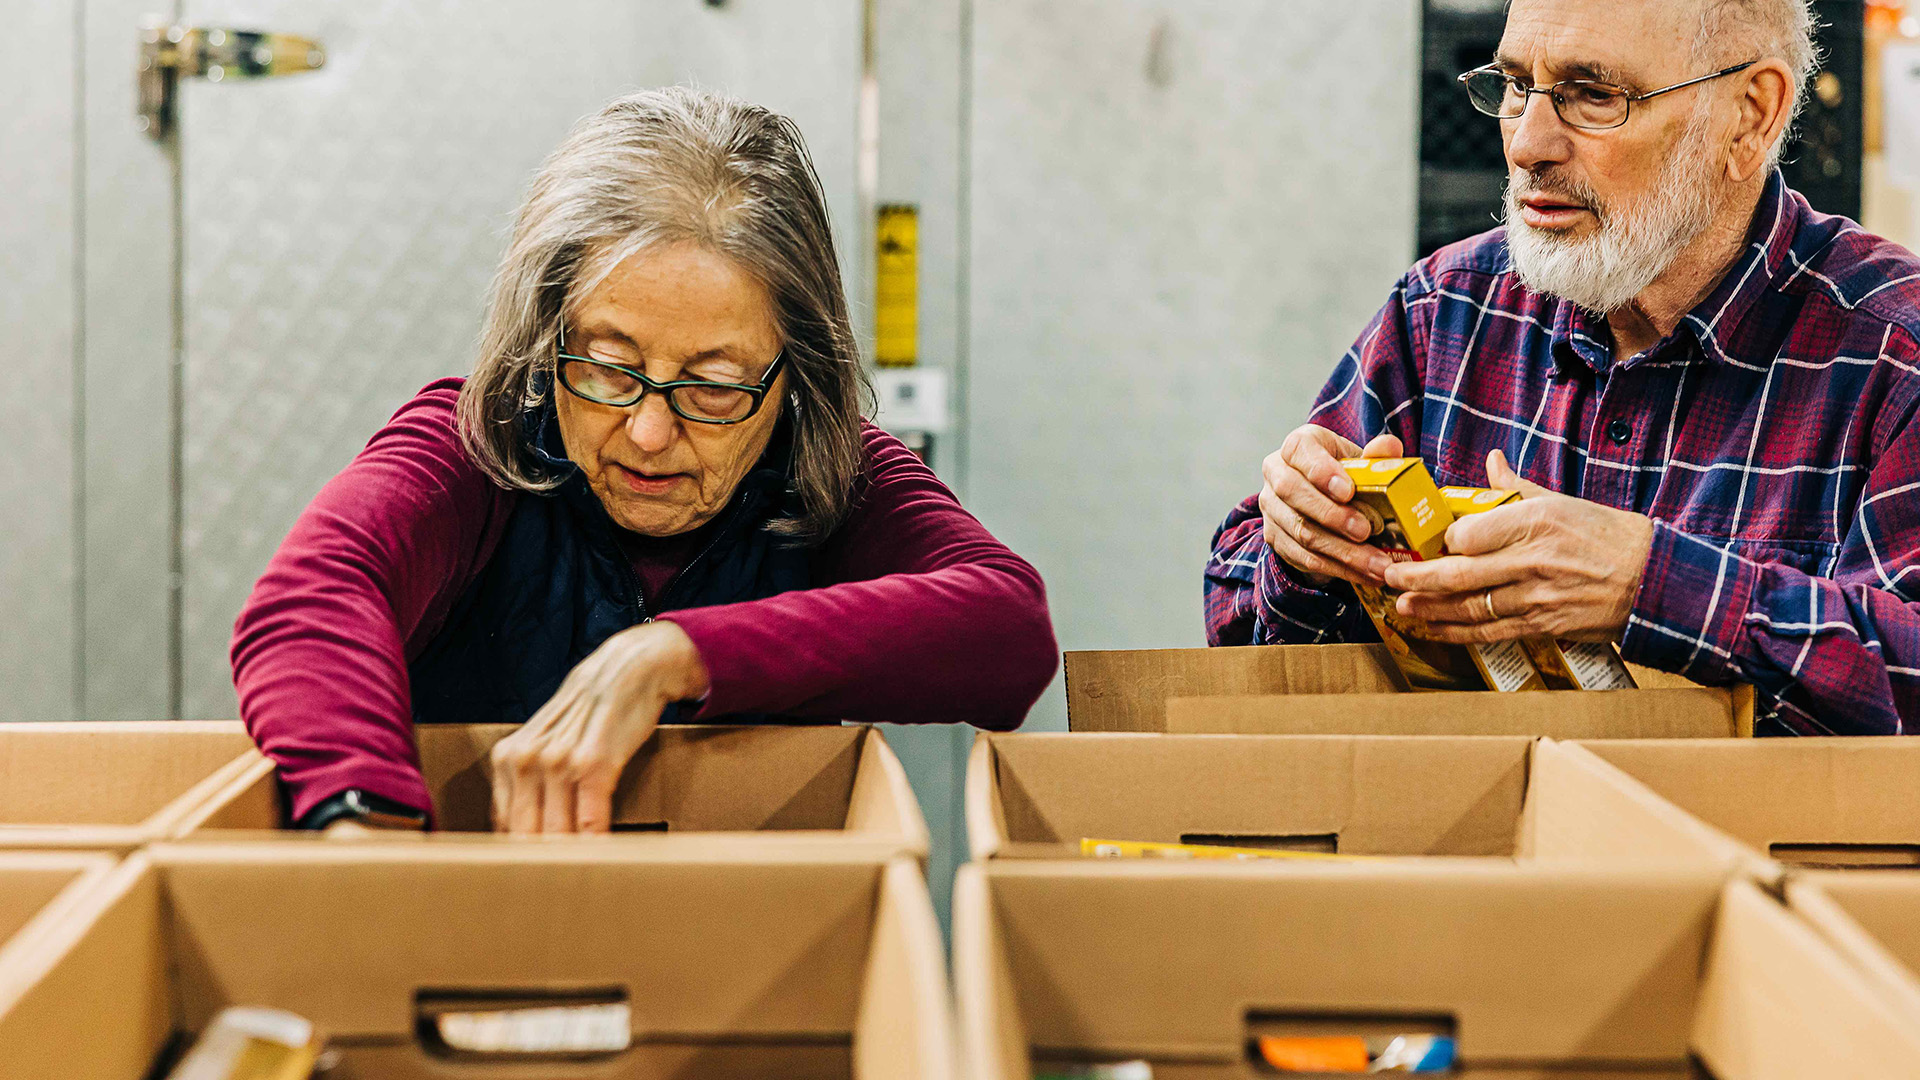 A woman and a man put nonperishable food into donation boxes.